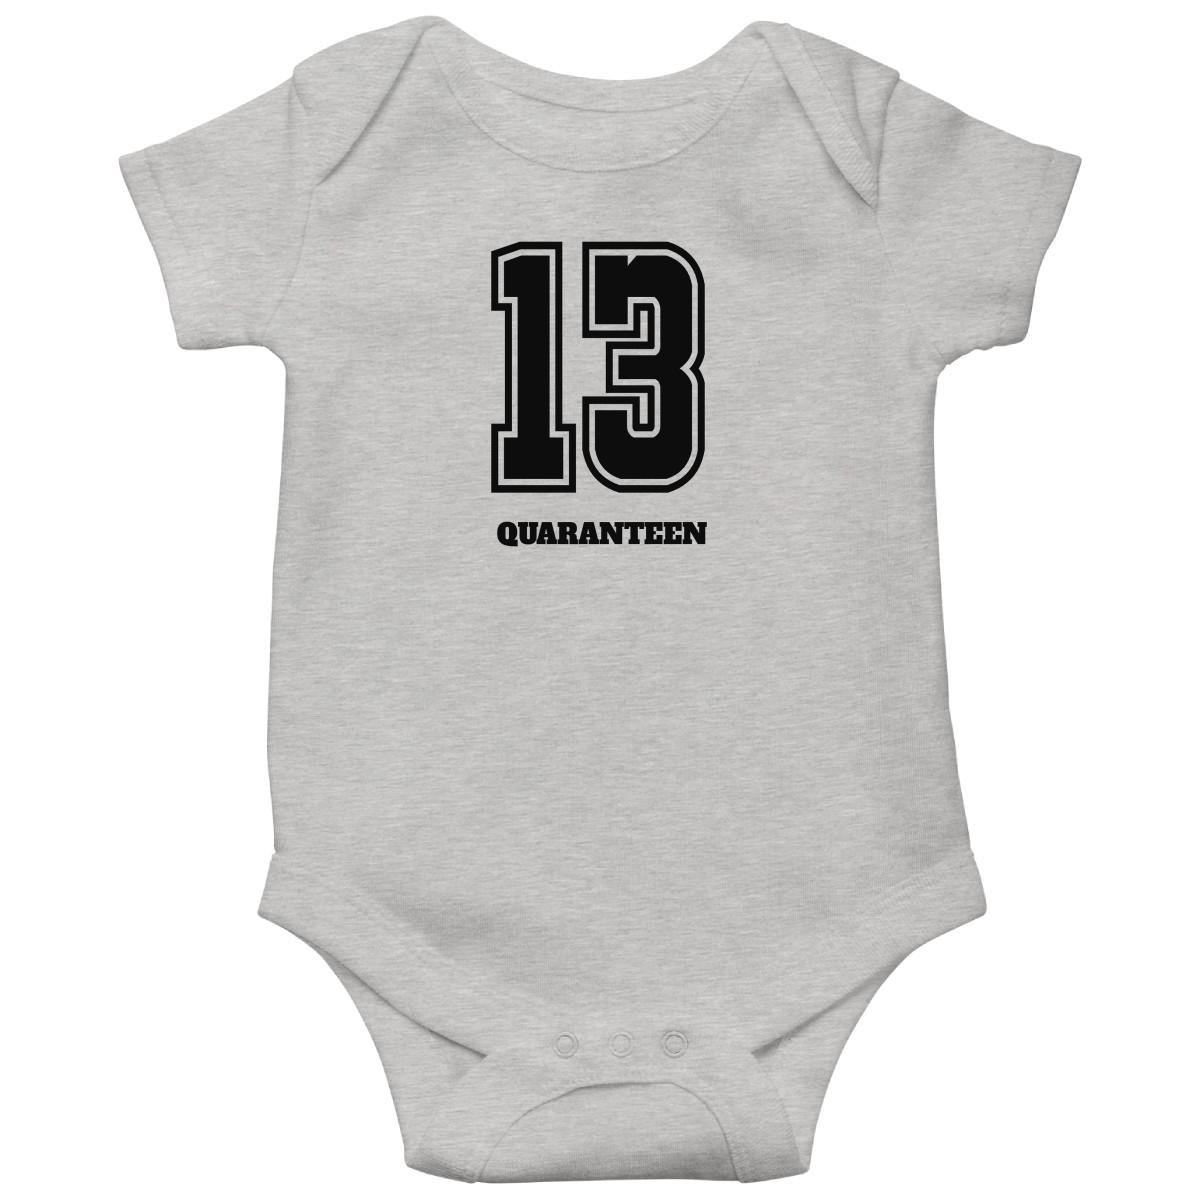 13 QUARANTEEN Baby Bodysuits | Gray